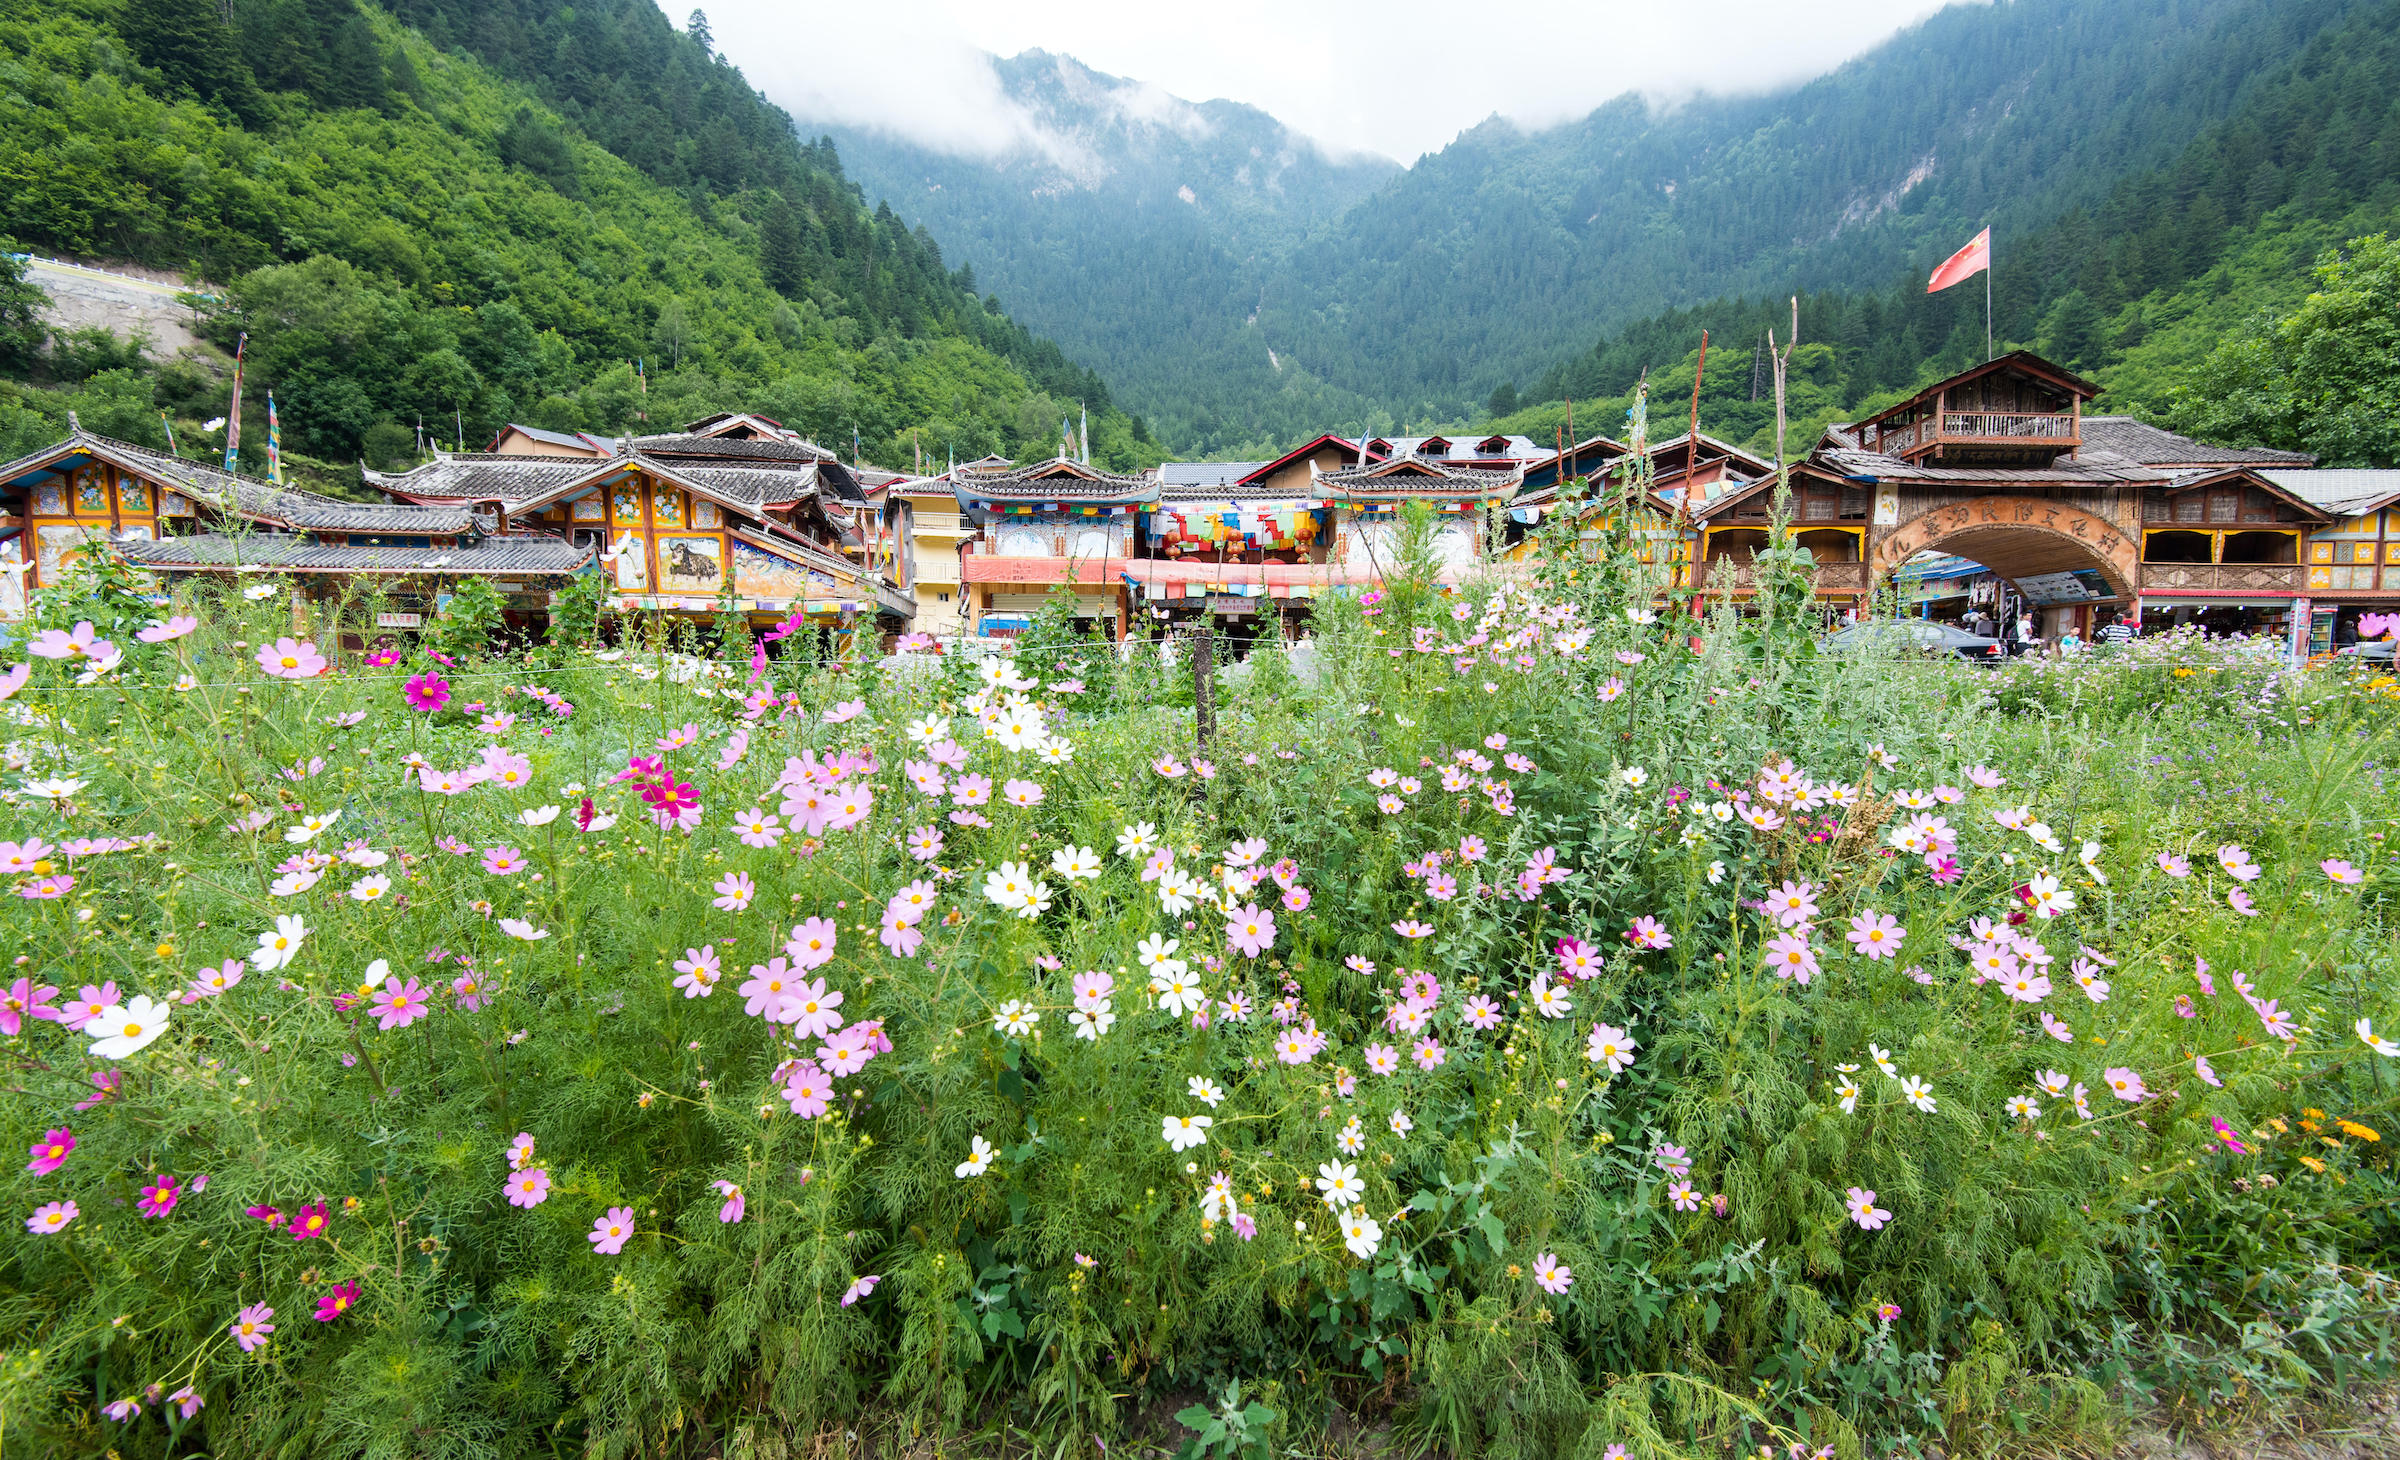 Shuzheng village, Jiuzhaigou, on the edge of the Tibetan Plateau in China's Sichuan province (Image: Alamy)